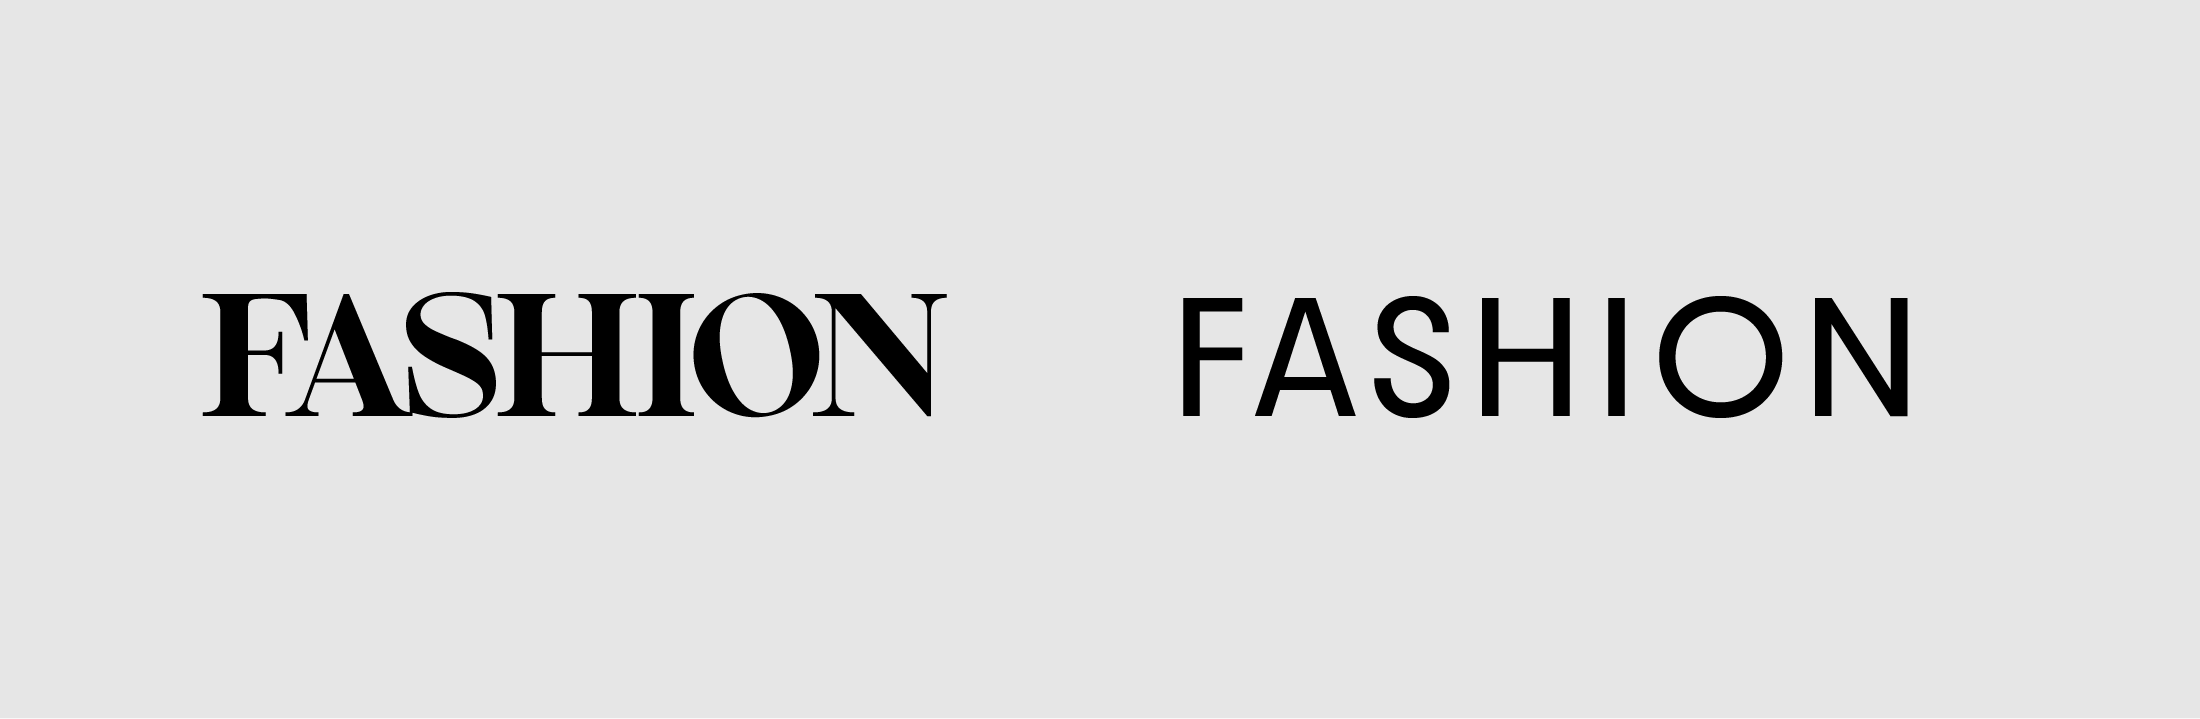 font for fashion logo designs